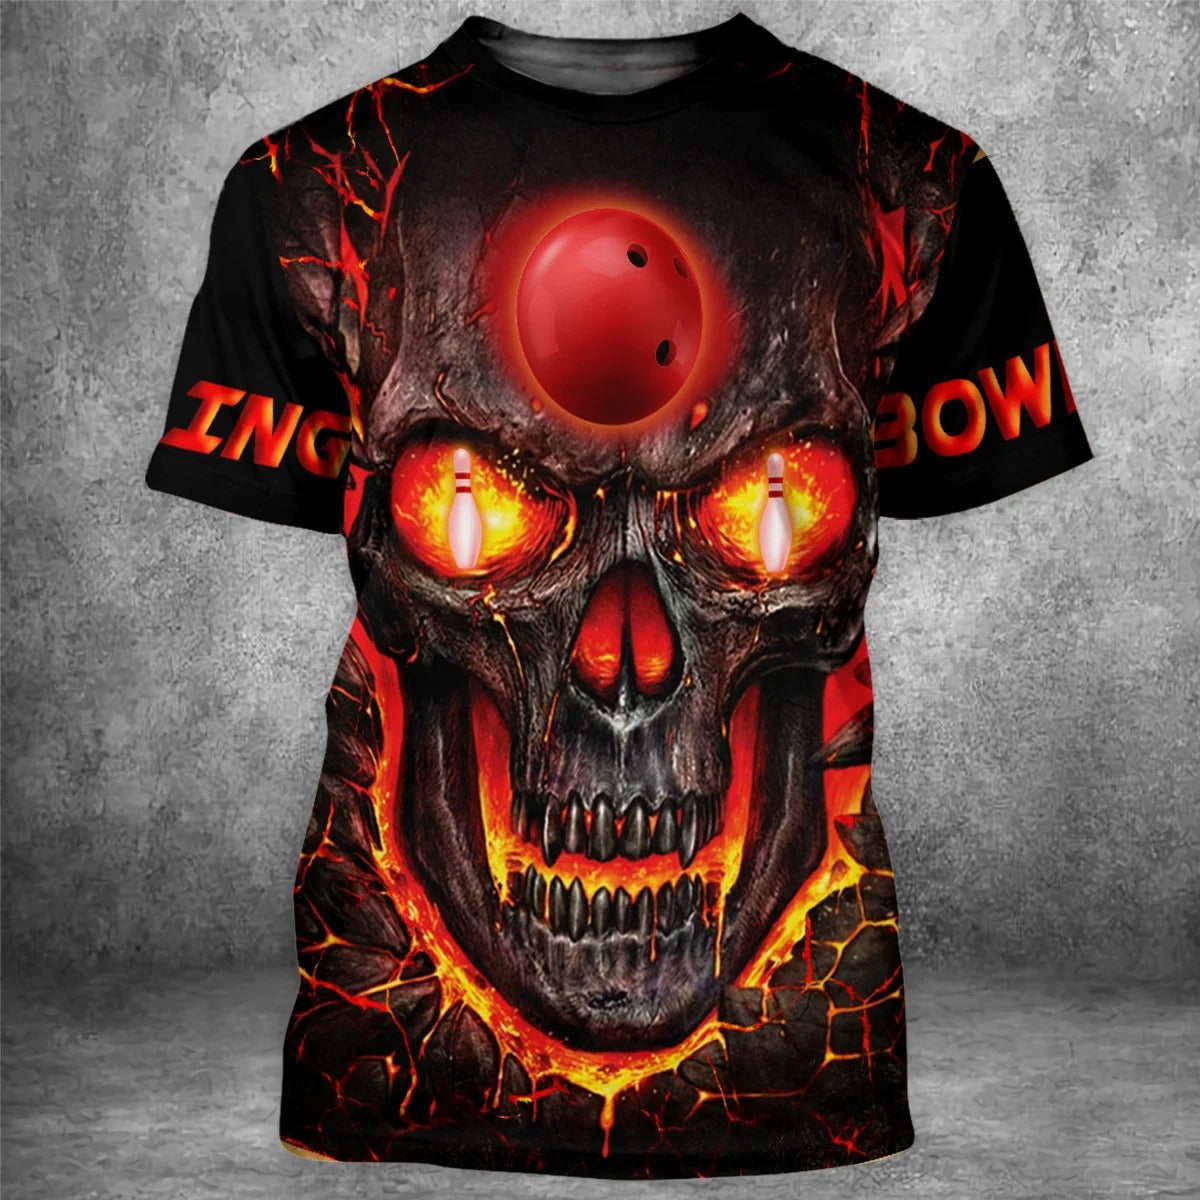 Bowling Skull 3D All Over Print Unisex Shirt Premium Shirt For Bowling Team Player